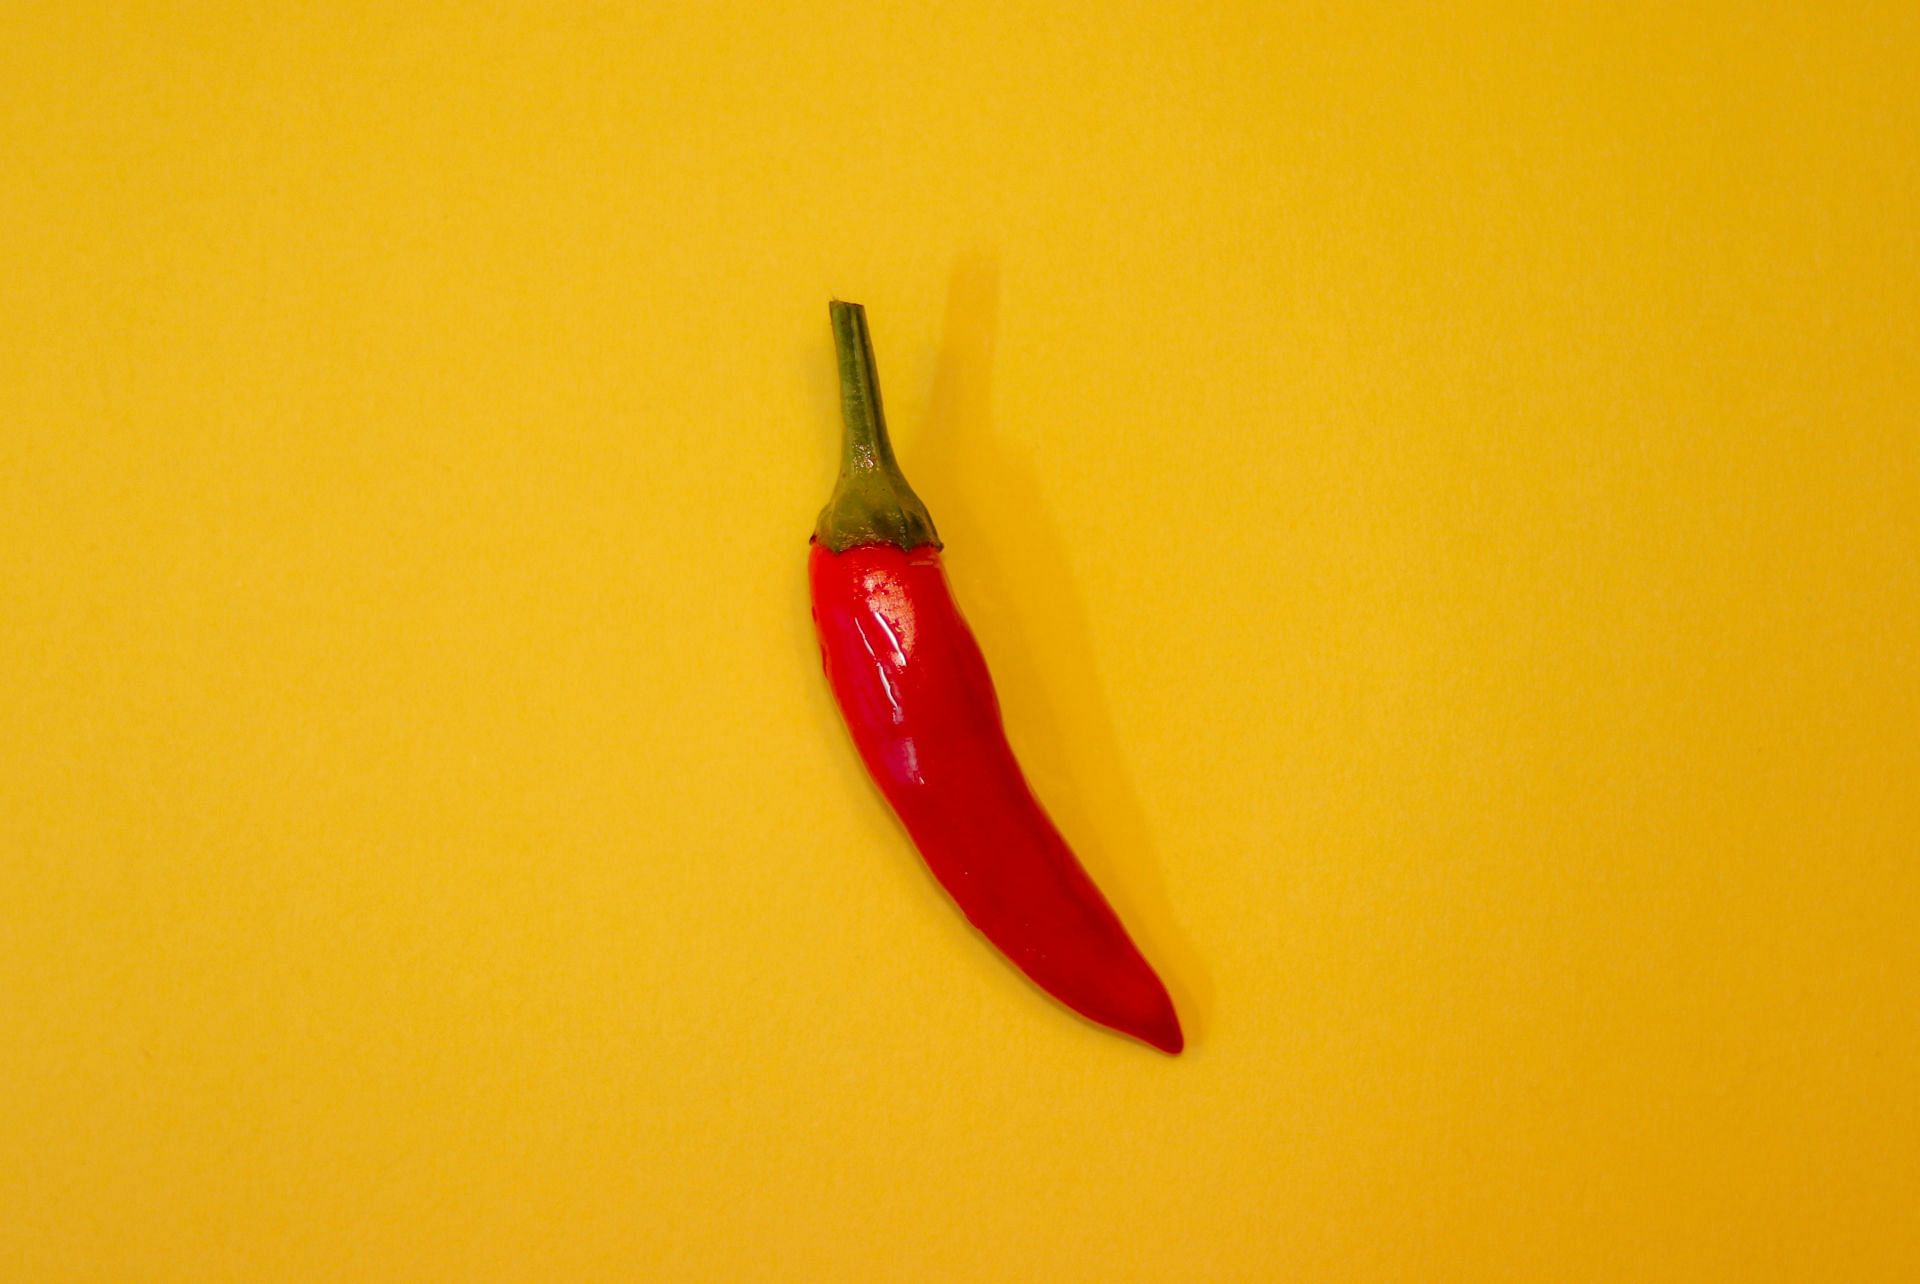 Benefits of hot pepper (image sourced via Pexels / Photo by Tom Swinnen)